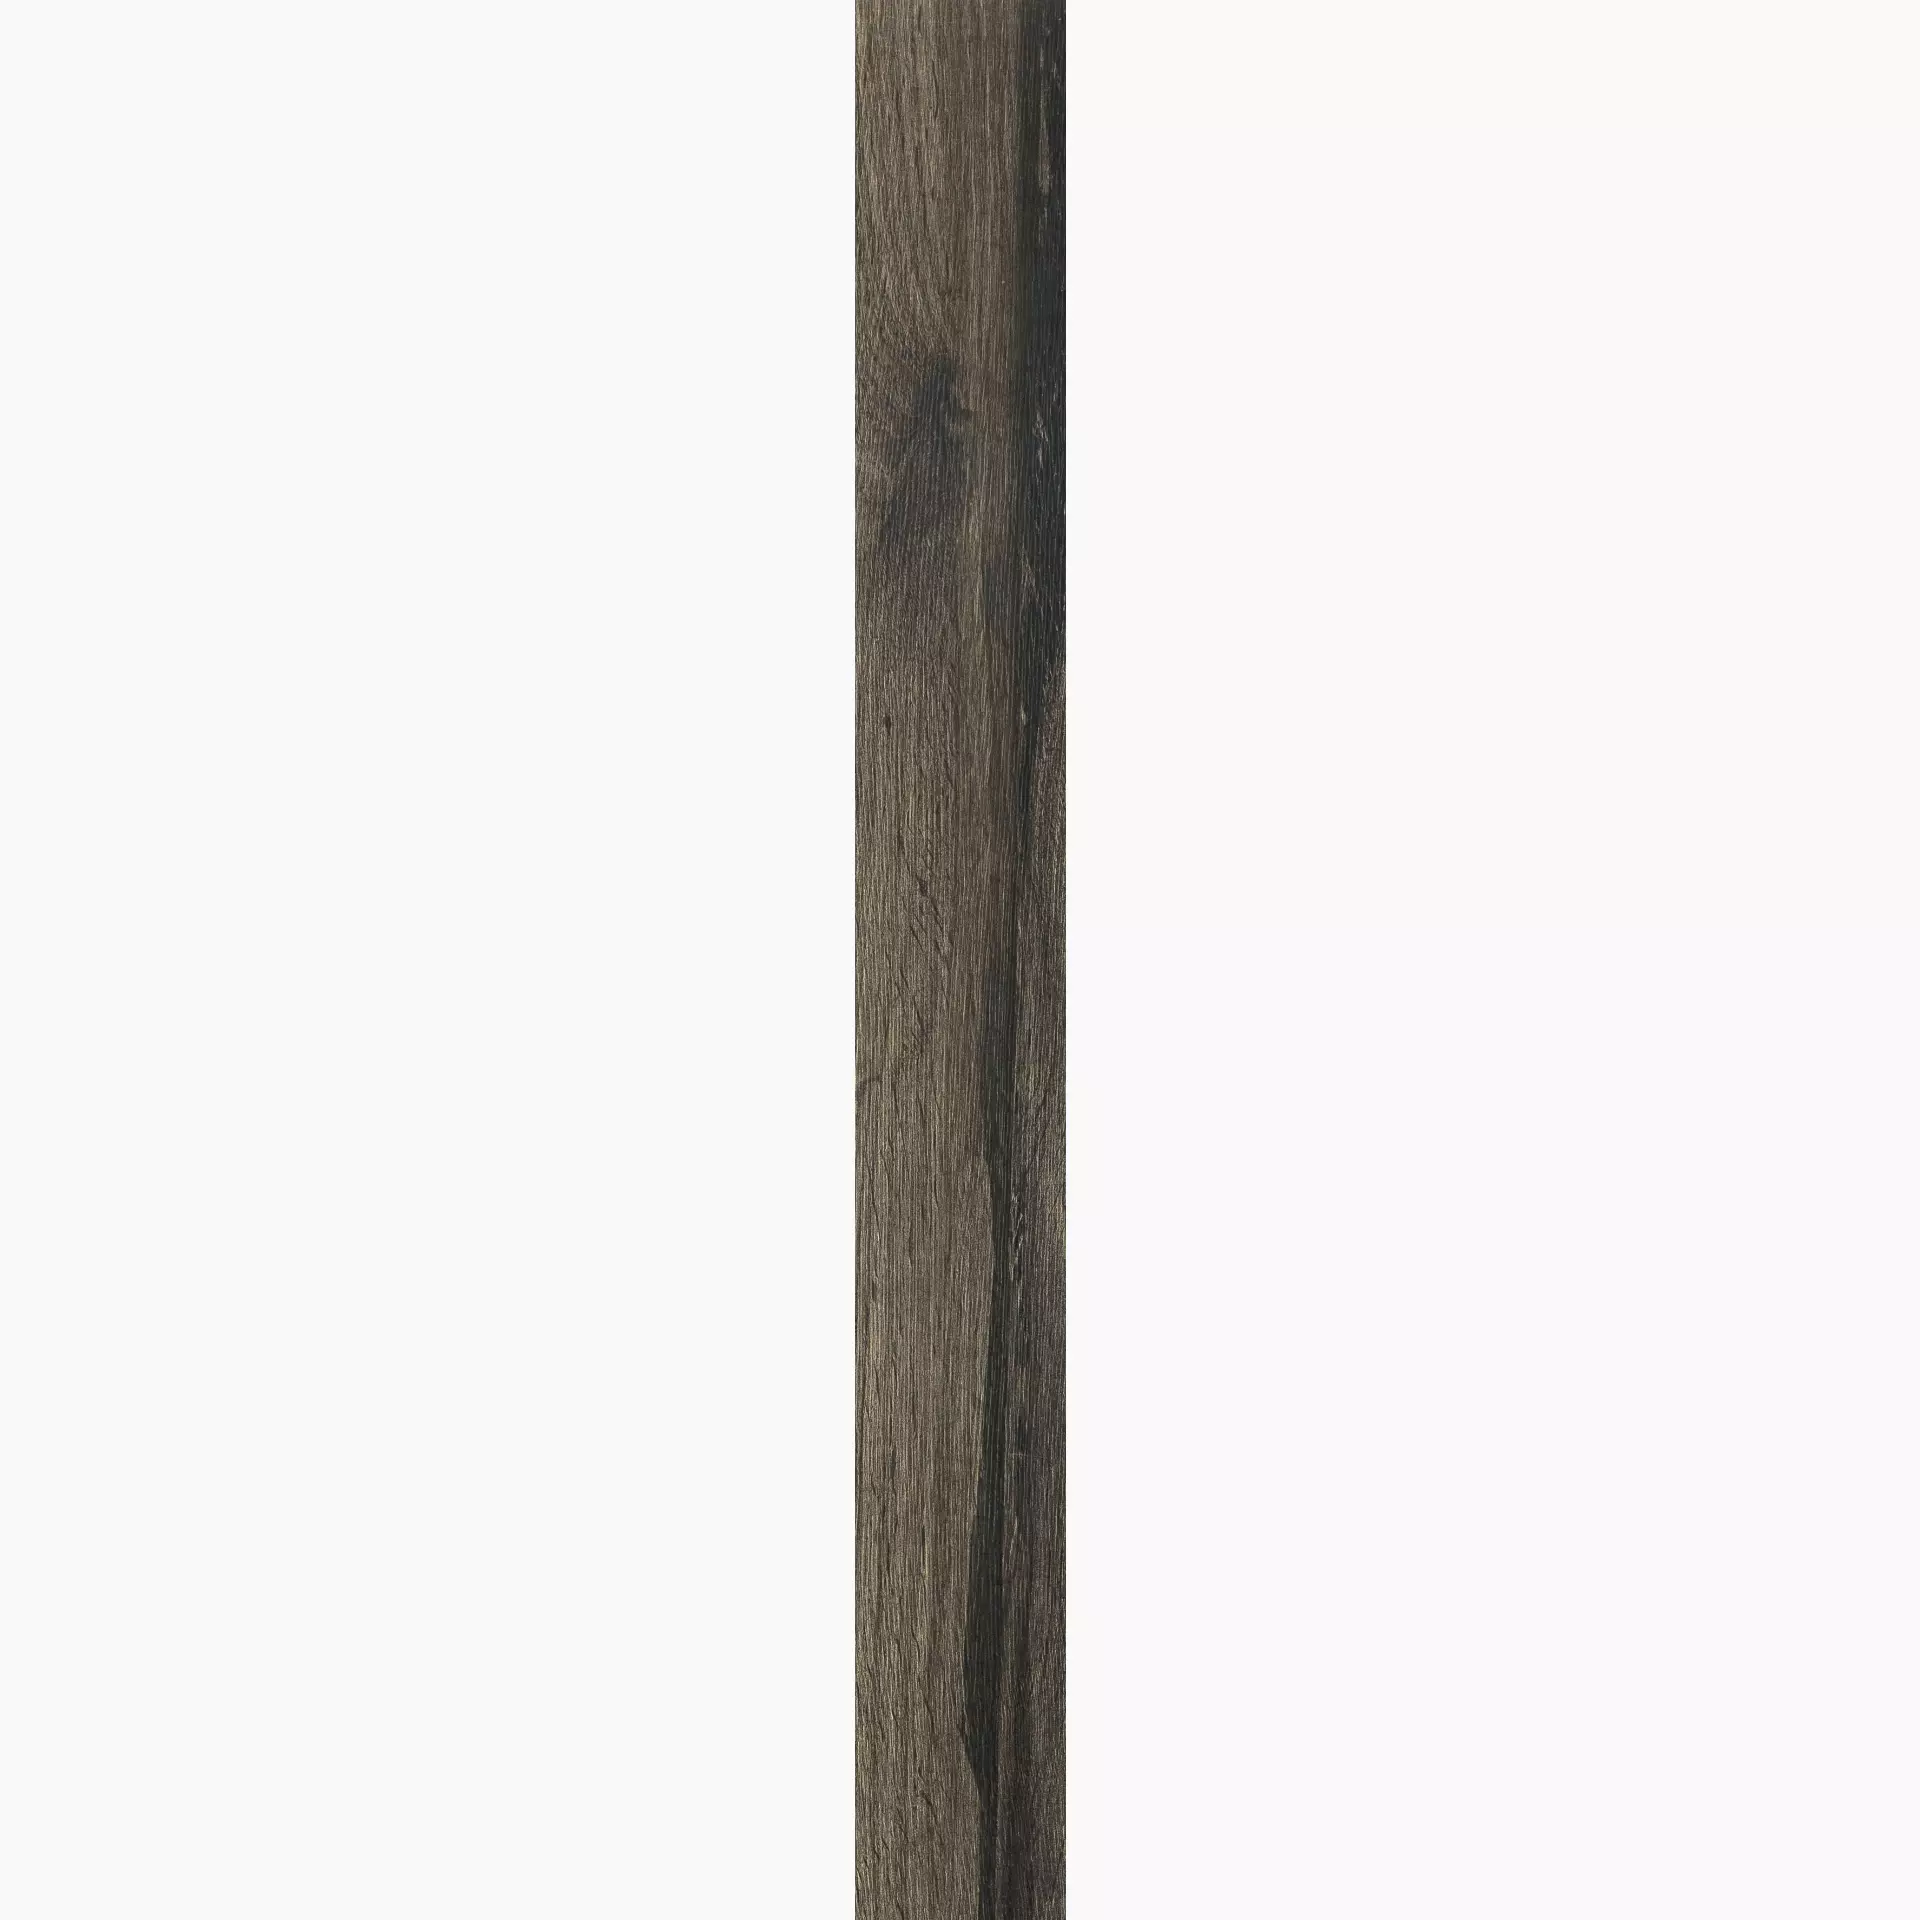 Florim Planches De Rex Choco Naturale – Matt 755703 20x180cm rectified 9mm